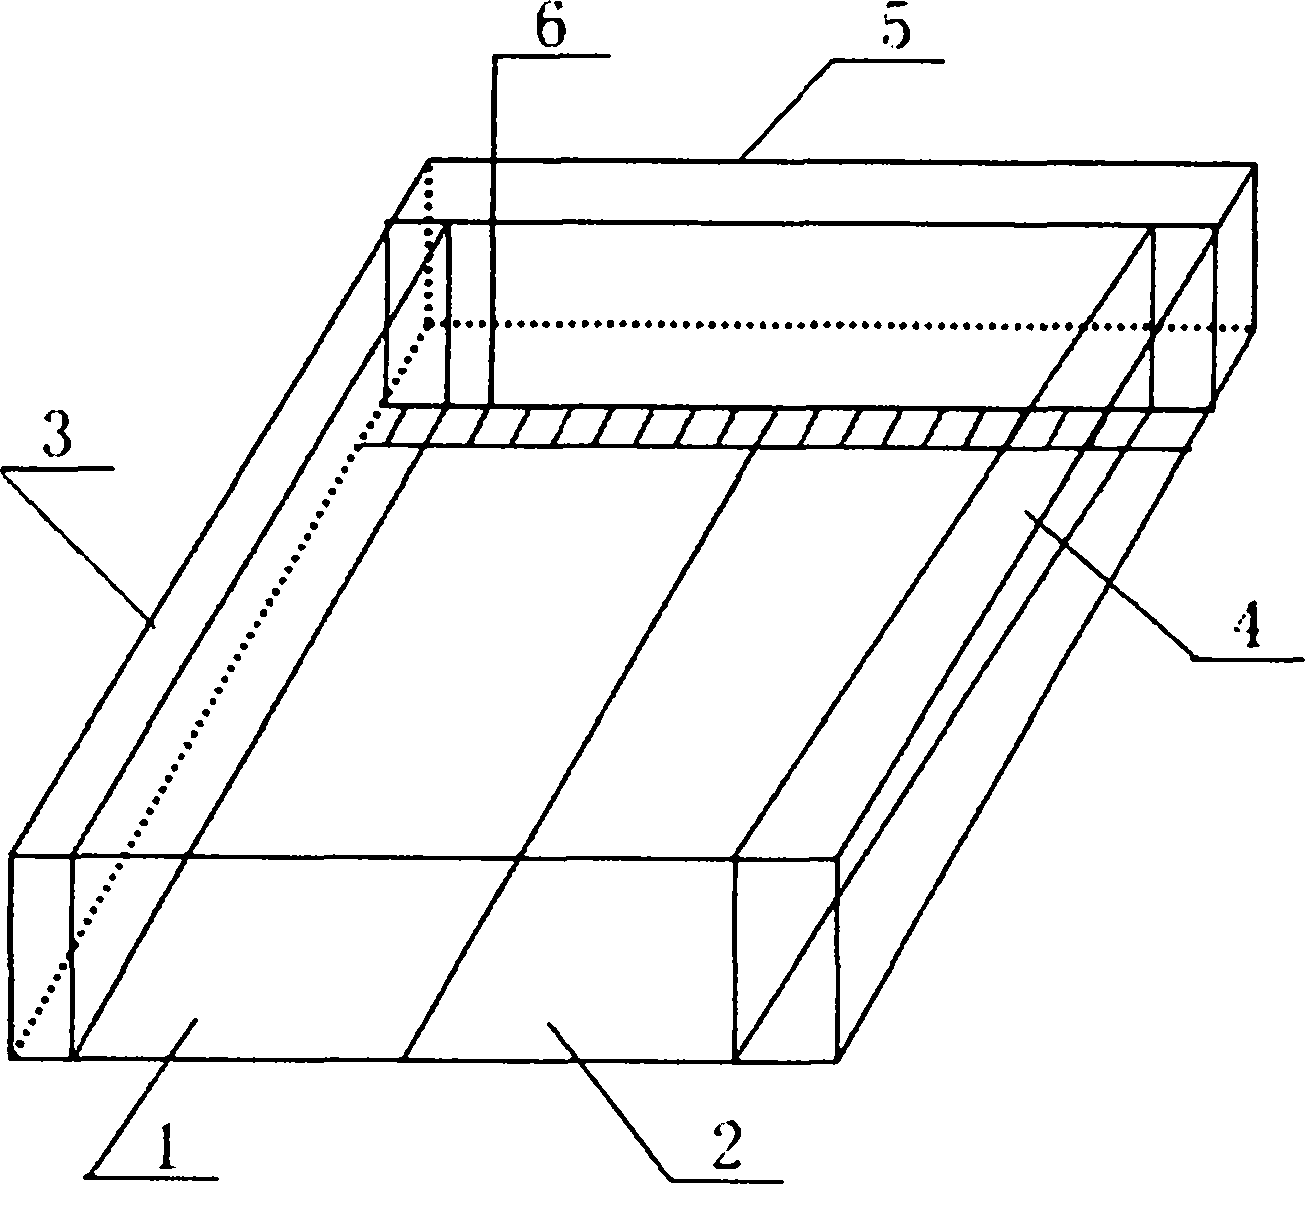 Power supply design method of high-density system